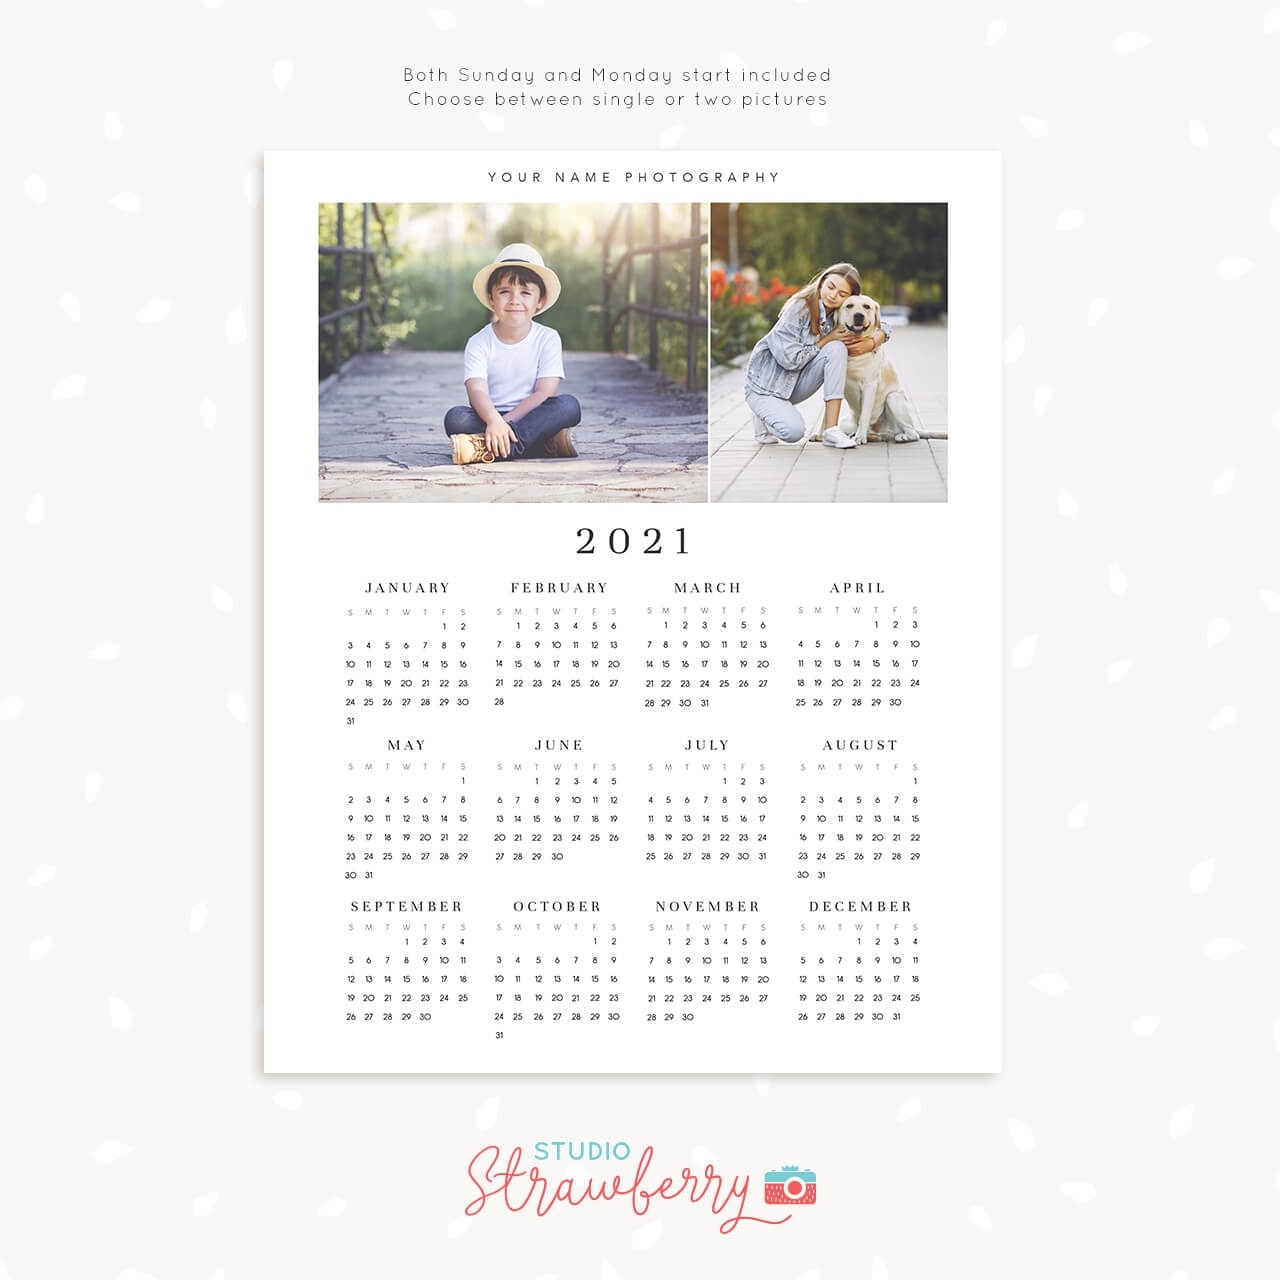 2021 Photo Calendar Template | One Page Printable Calendar Calendar Template One Page